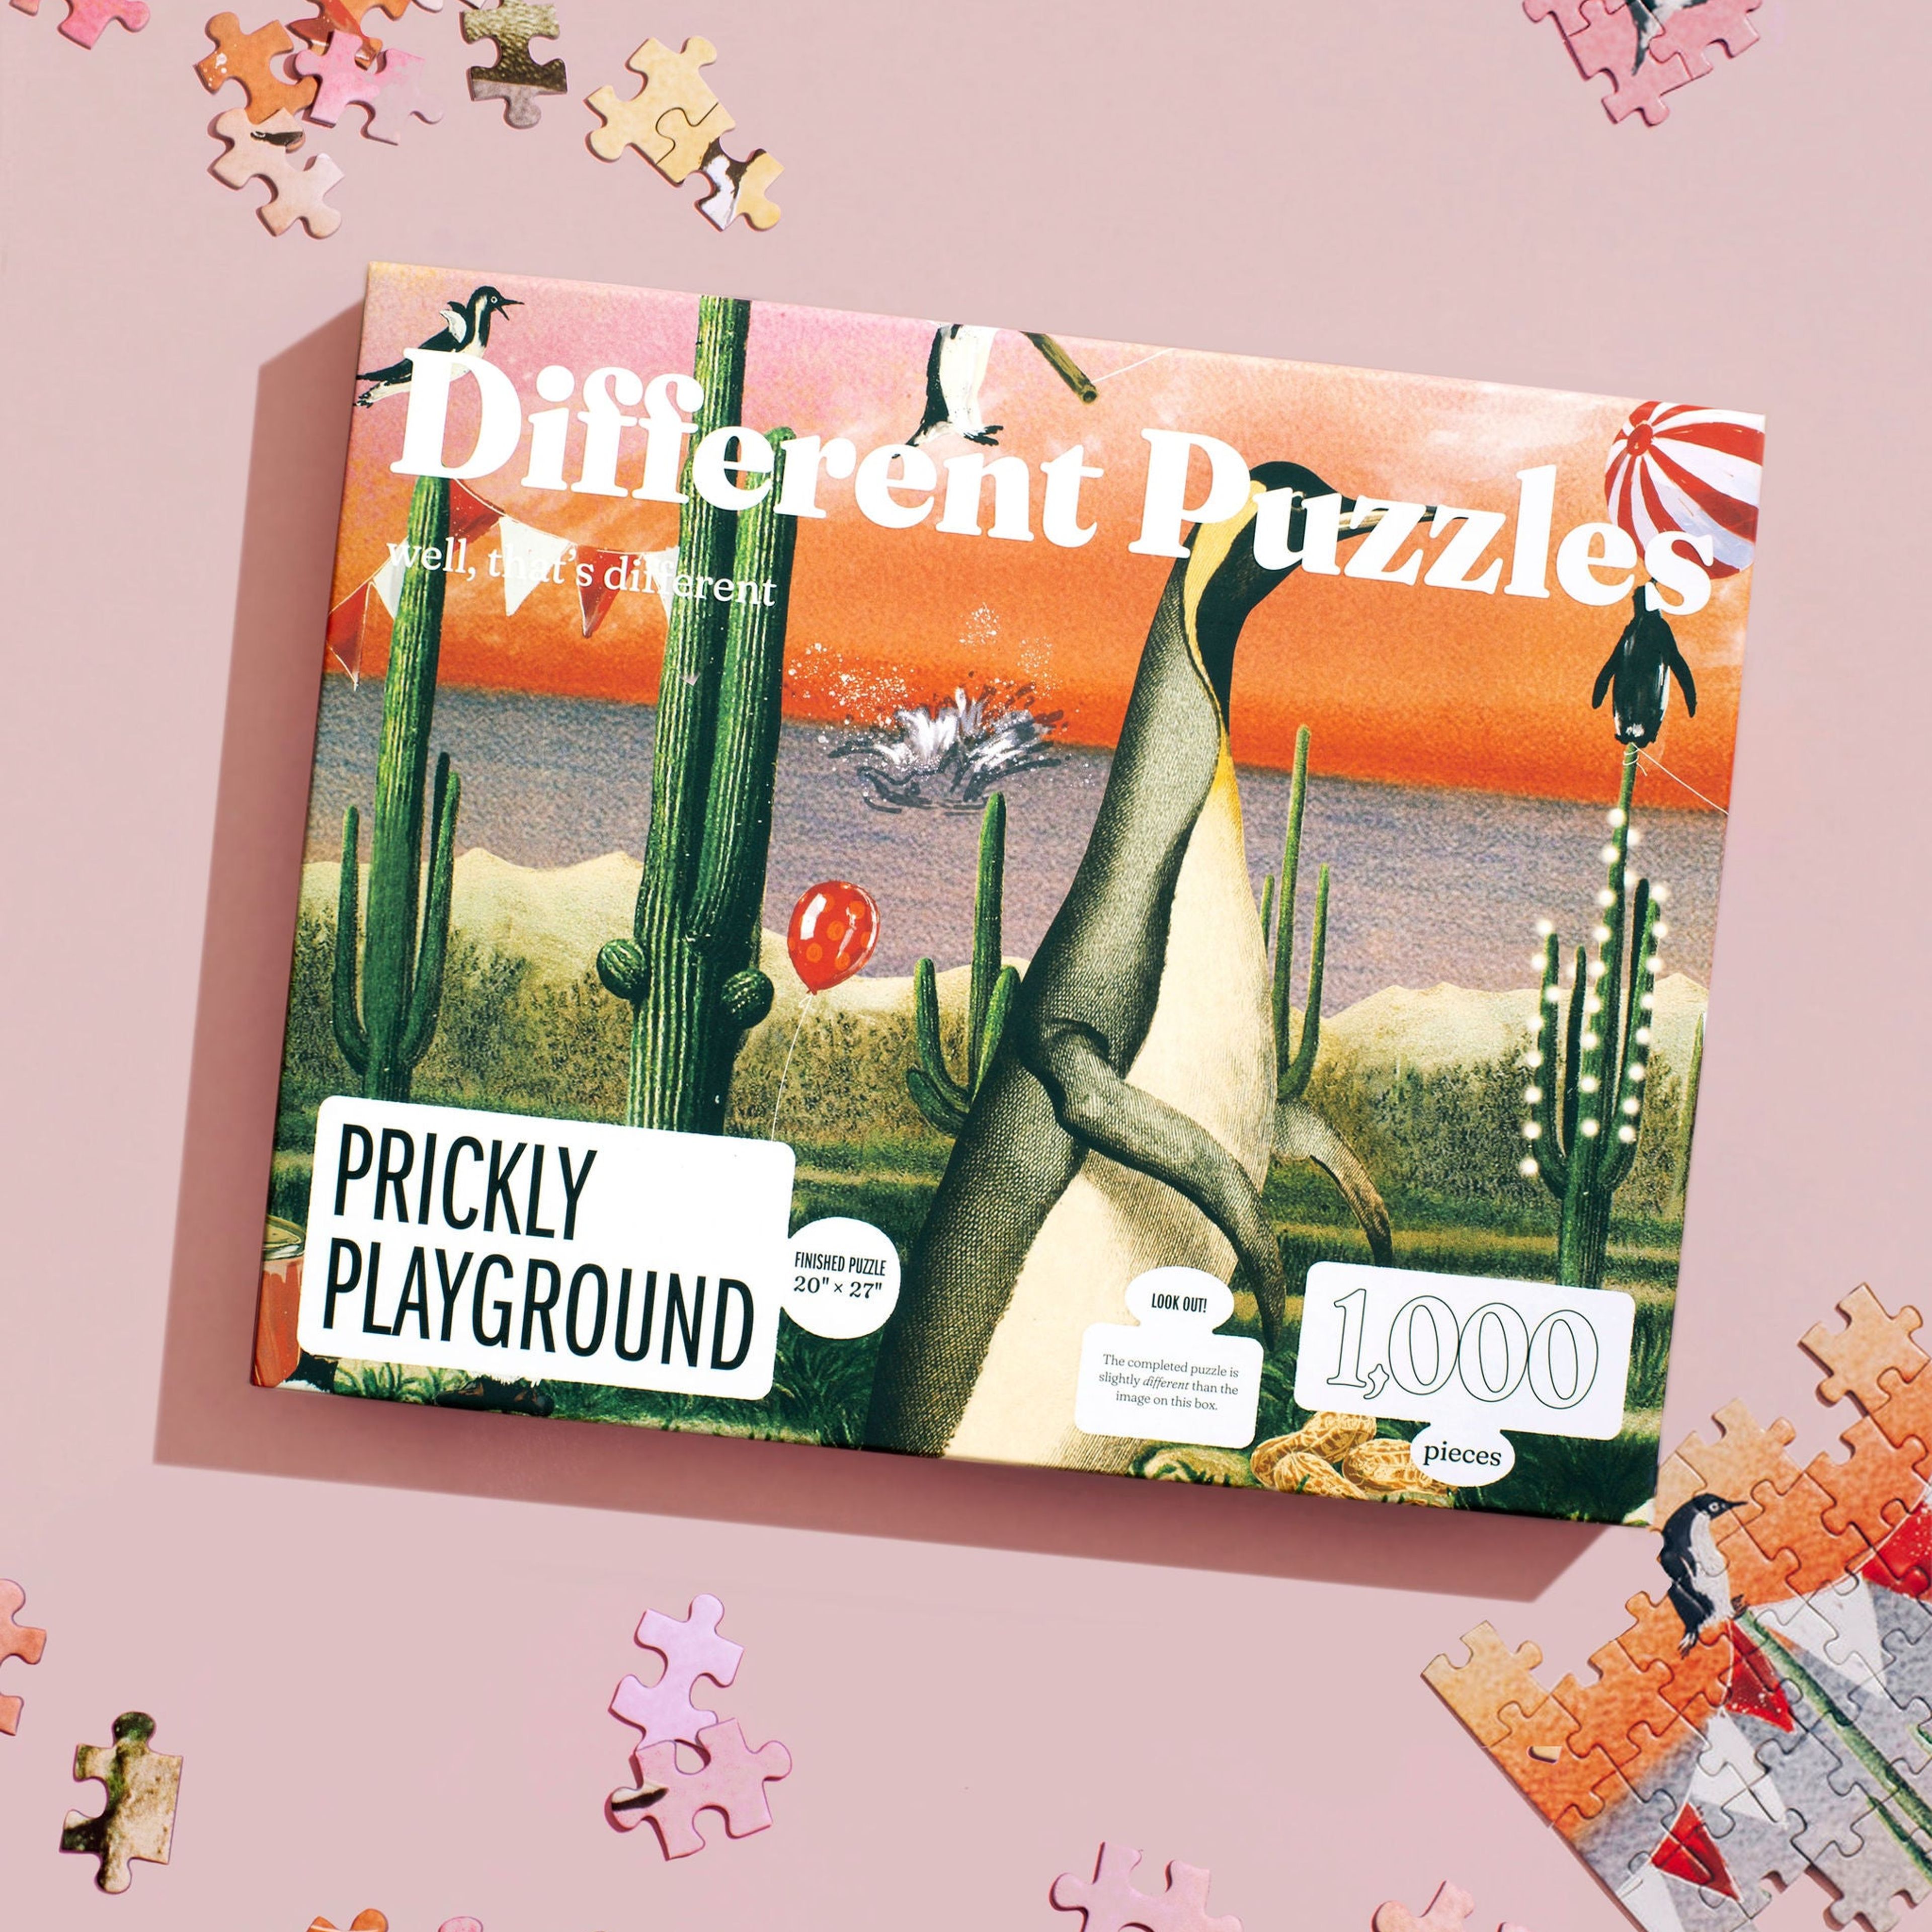 Prickly Playground – 1,000 pieces